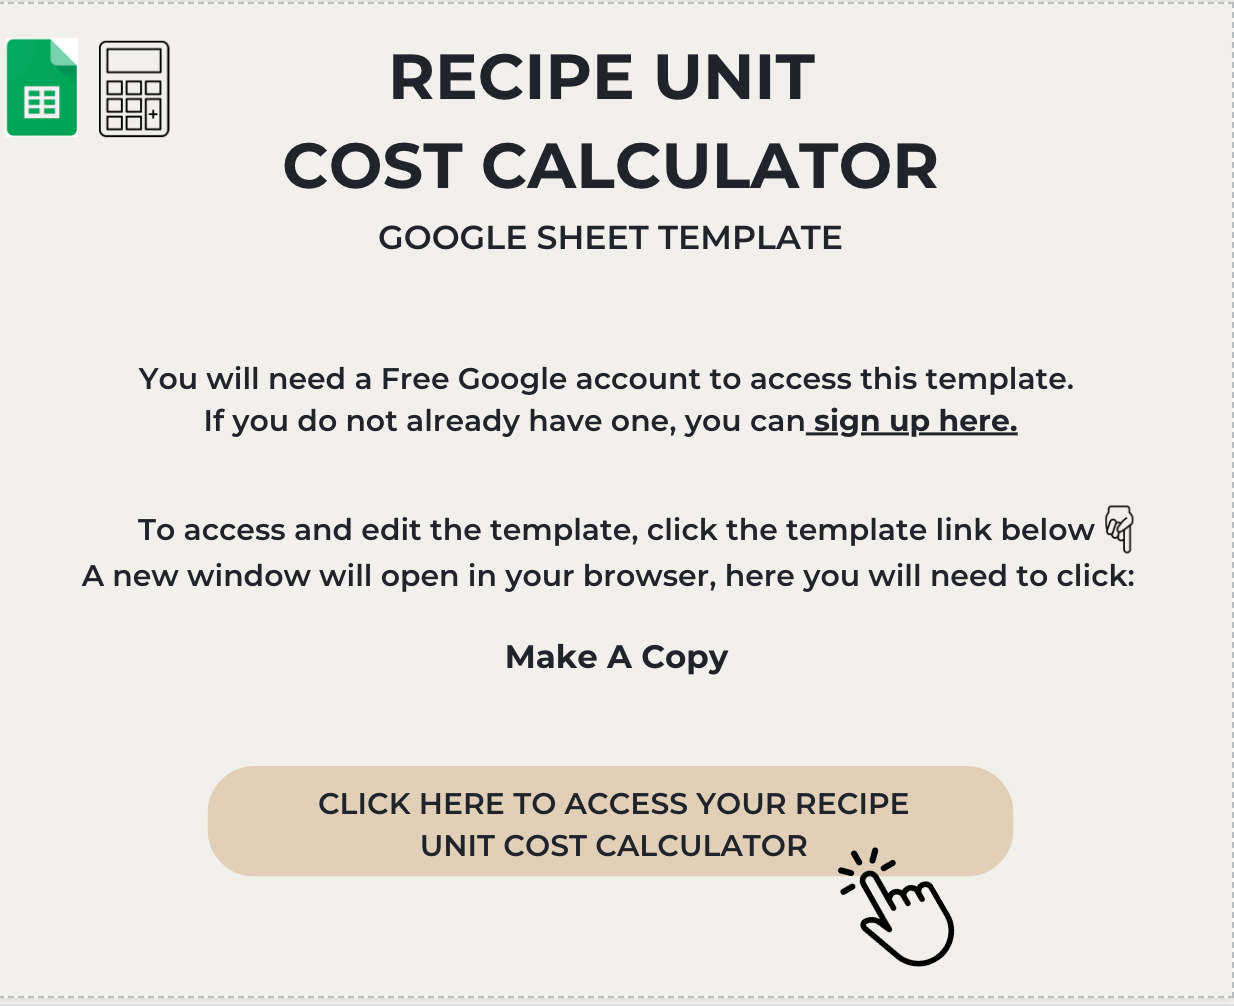 Food Business - Recipe Unit Cost Calculator